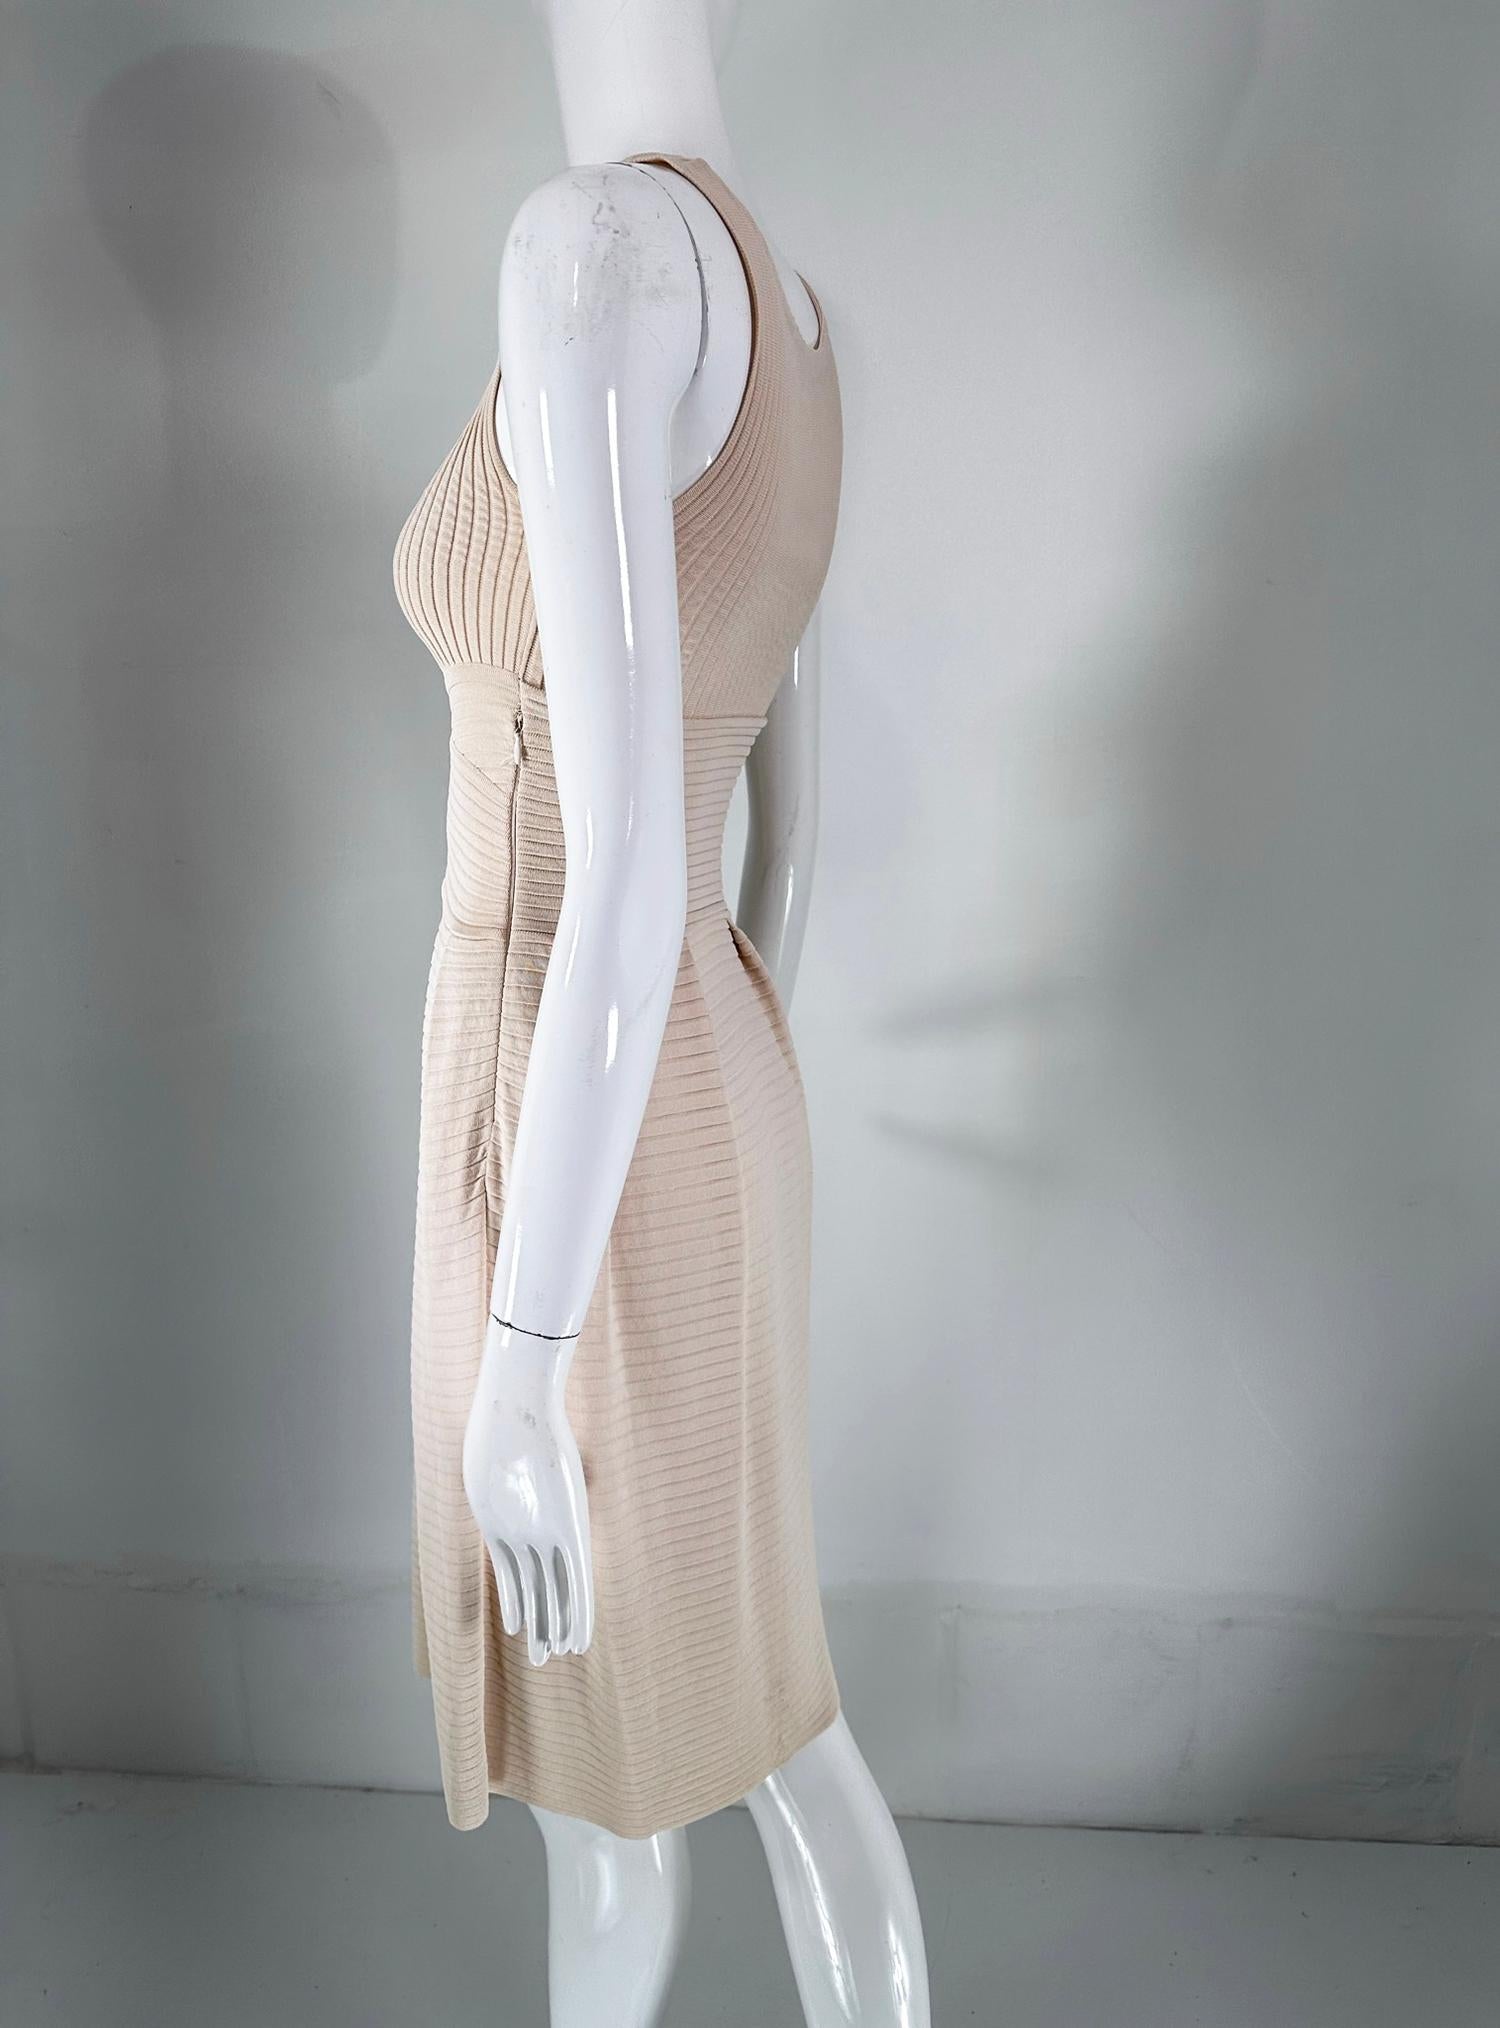 Christian Dior Paris Ribbed Knit Beige Tank Dress 2010 For Sale 7